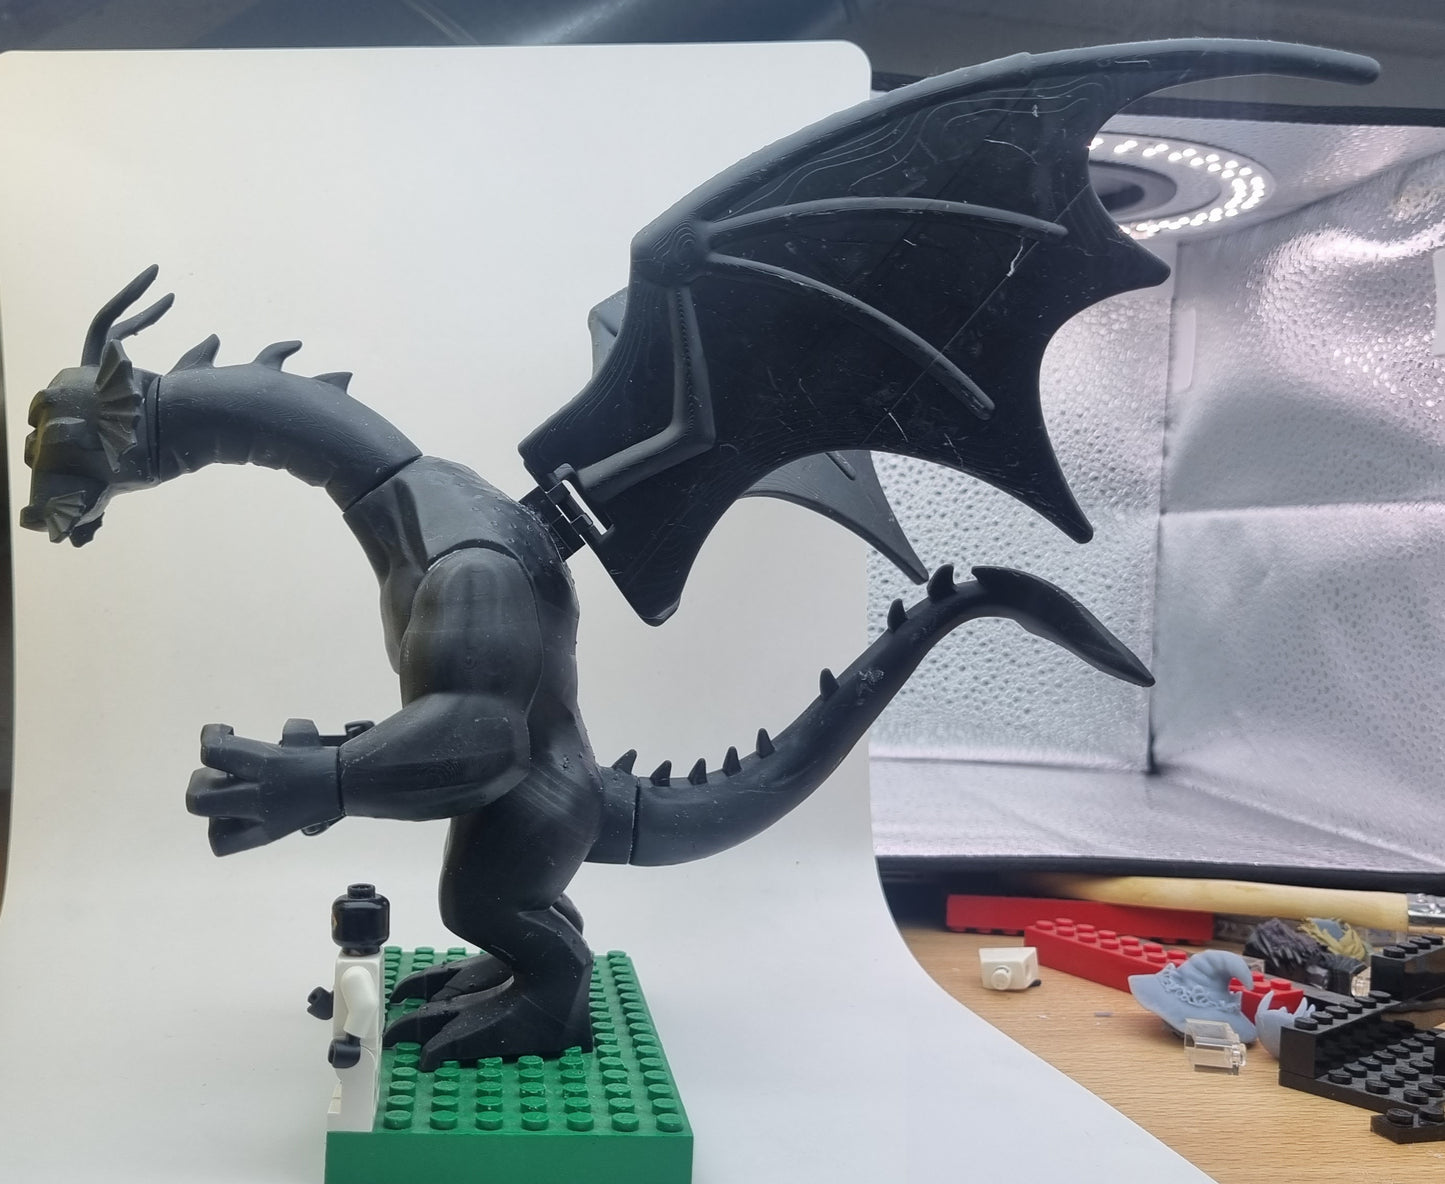 Building toy custom 3D printed huge green dragon!